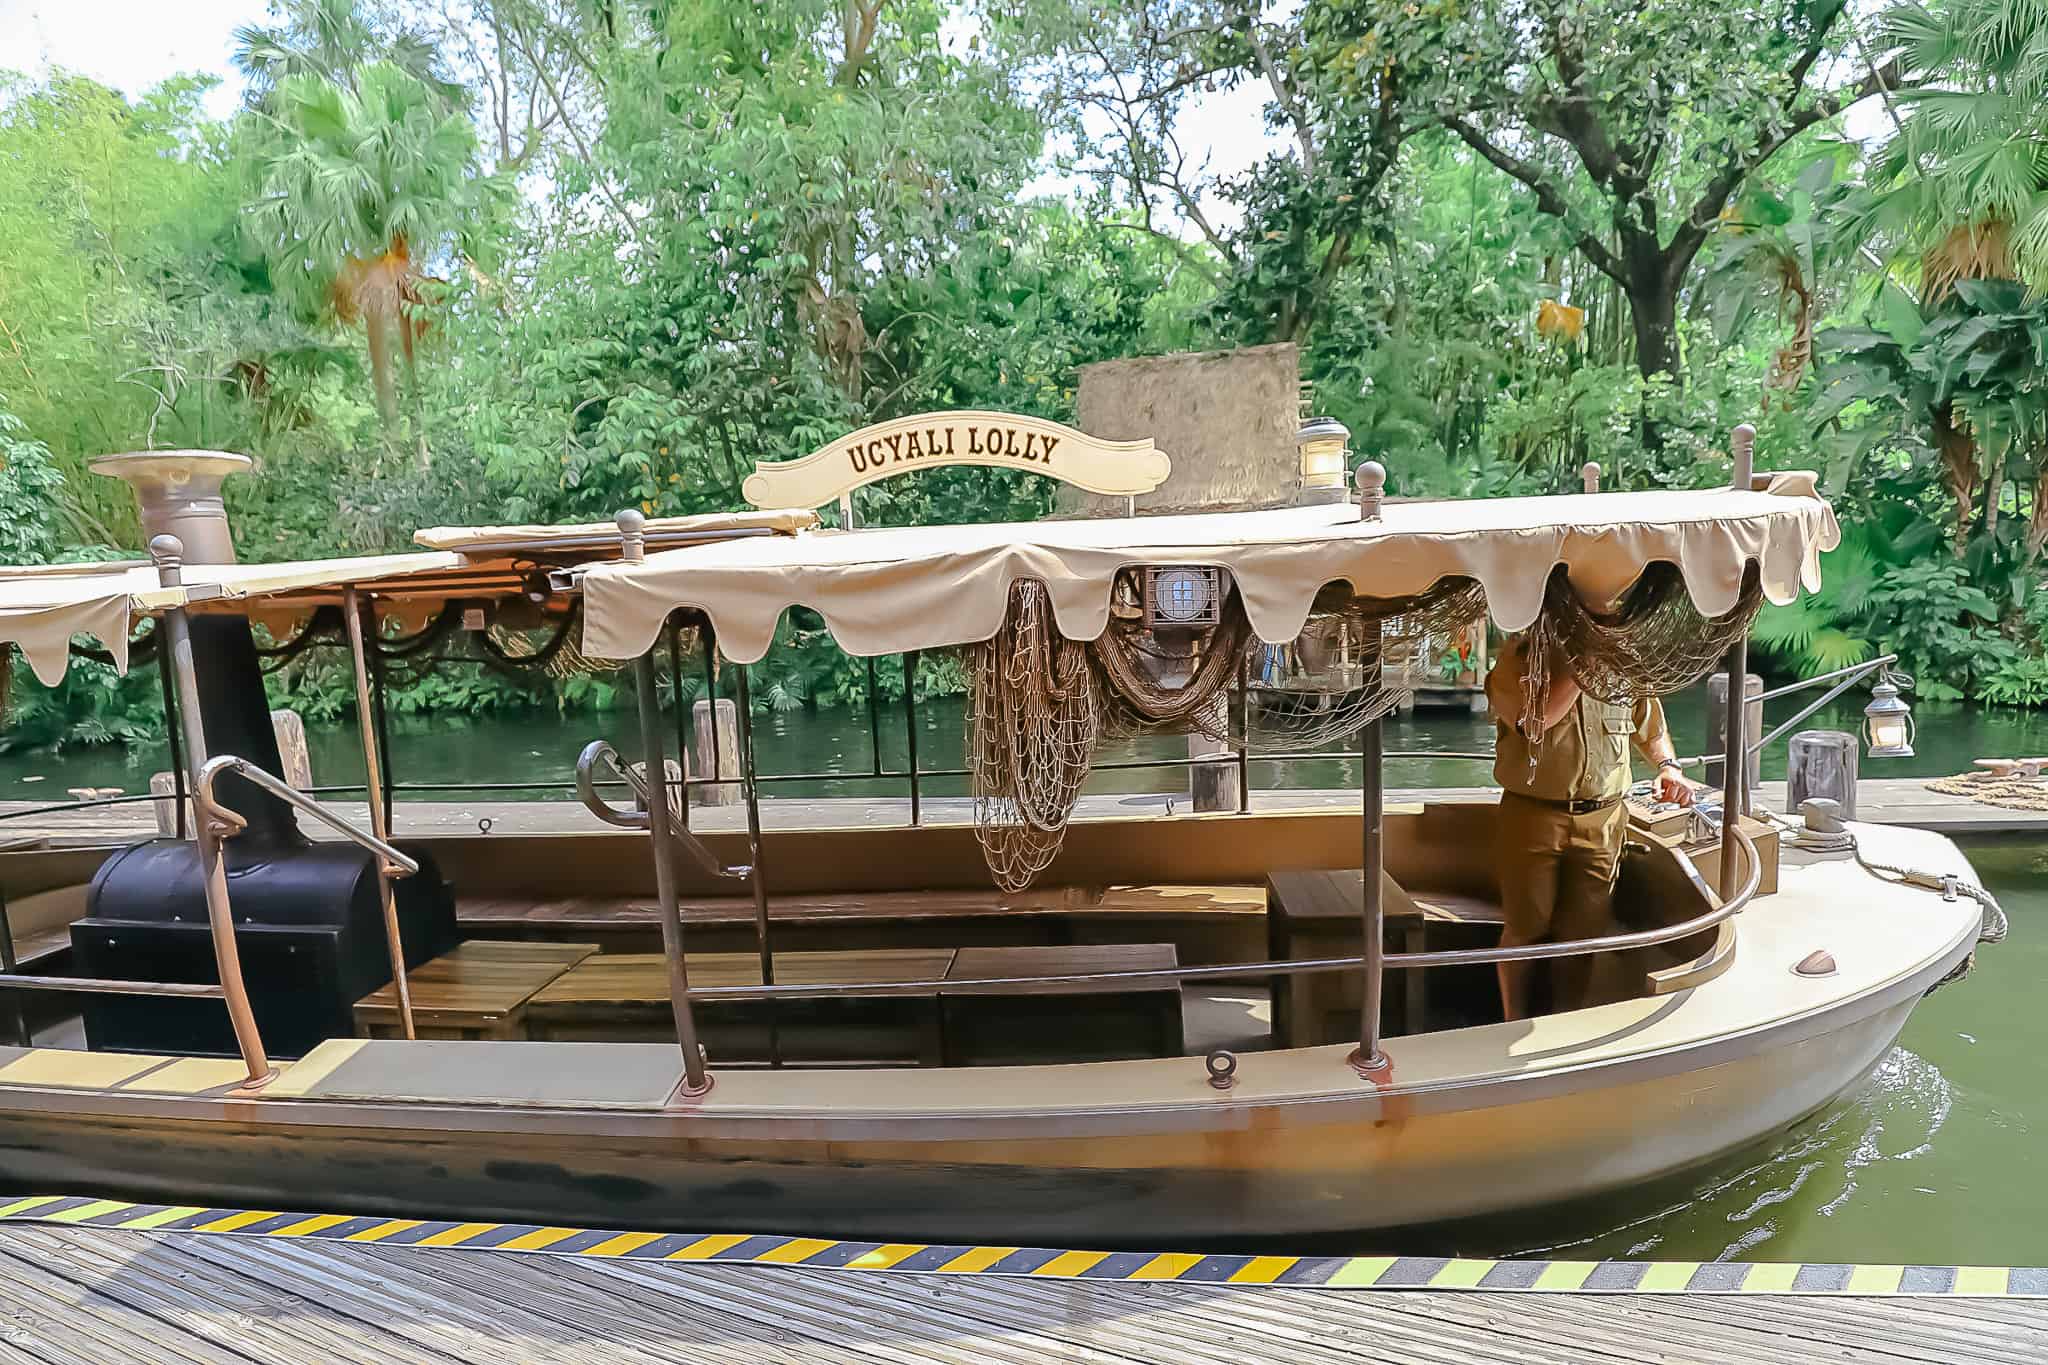 A Jungle Cruise boat named Ucyali Lolly